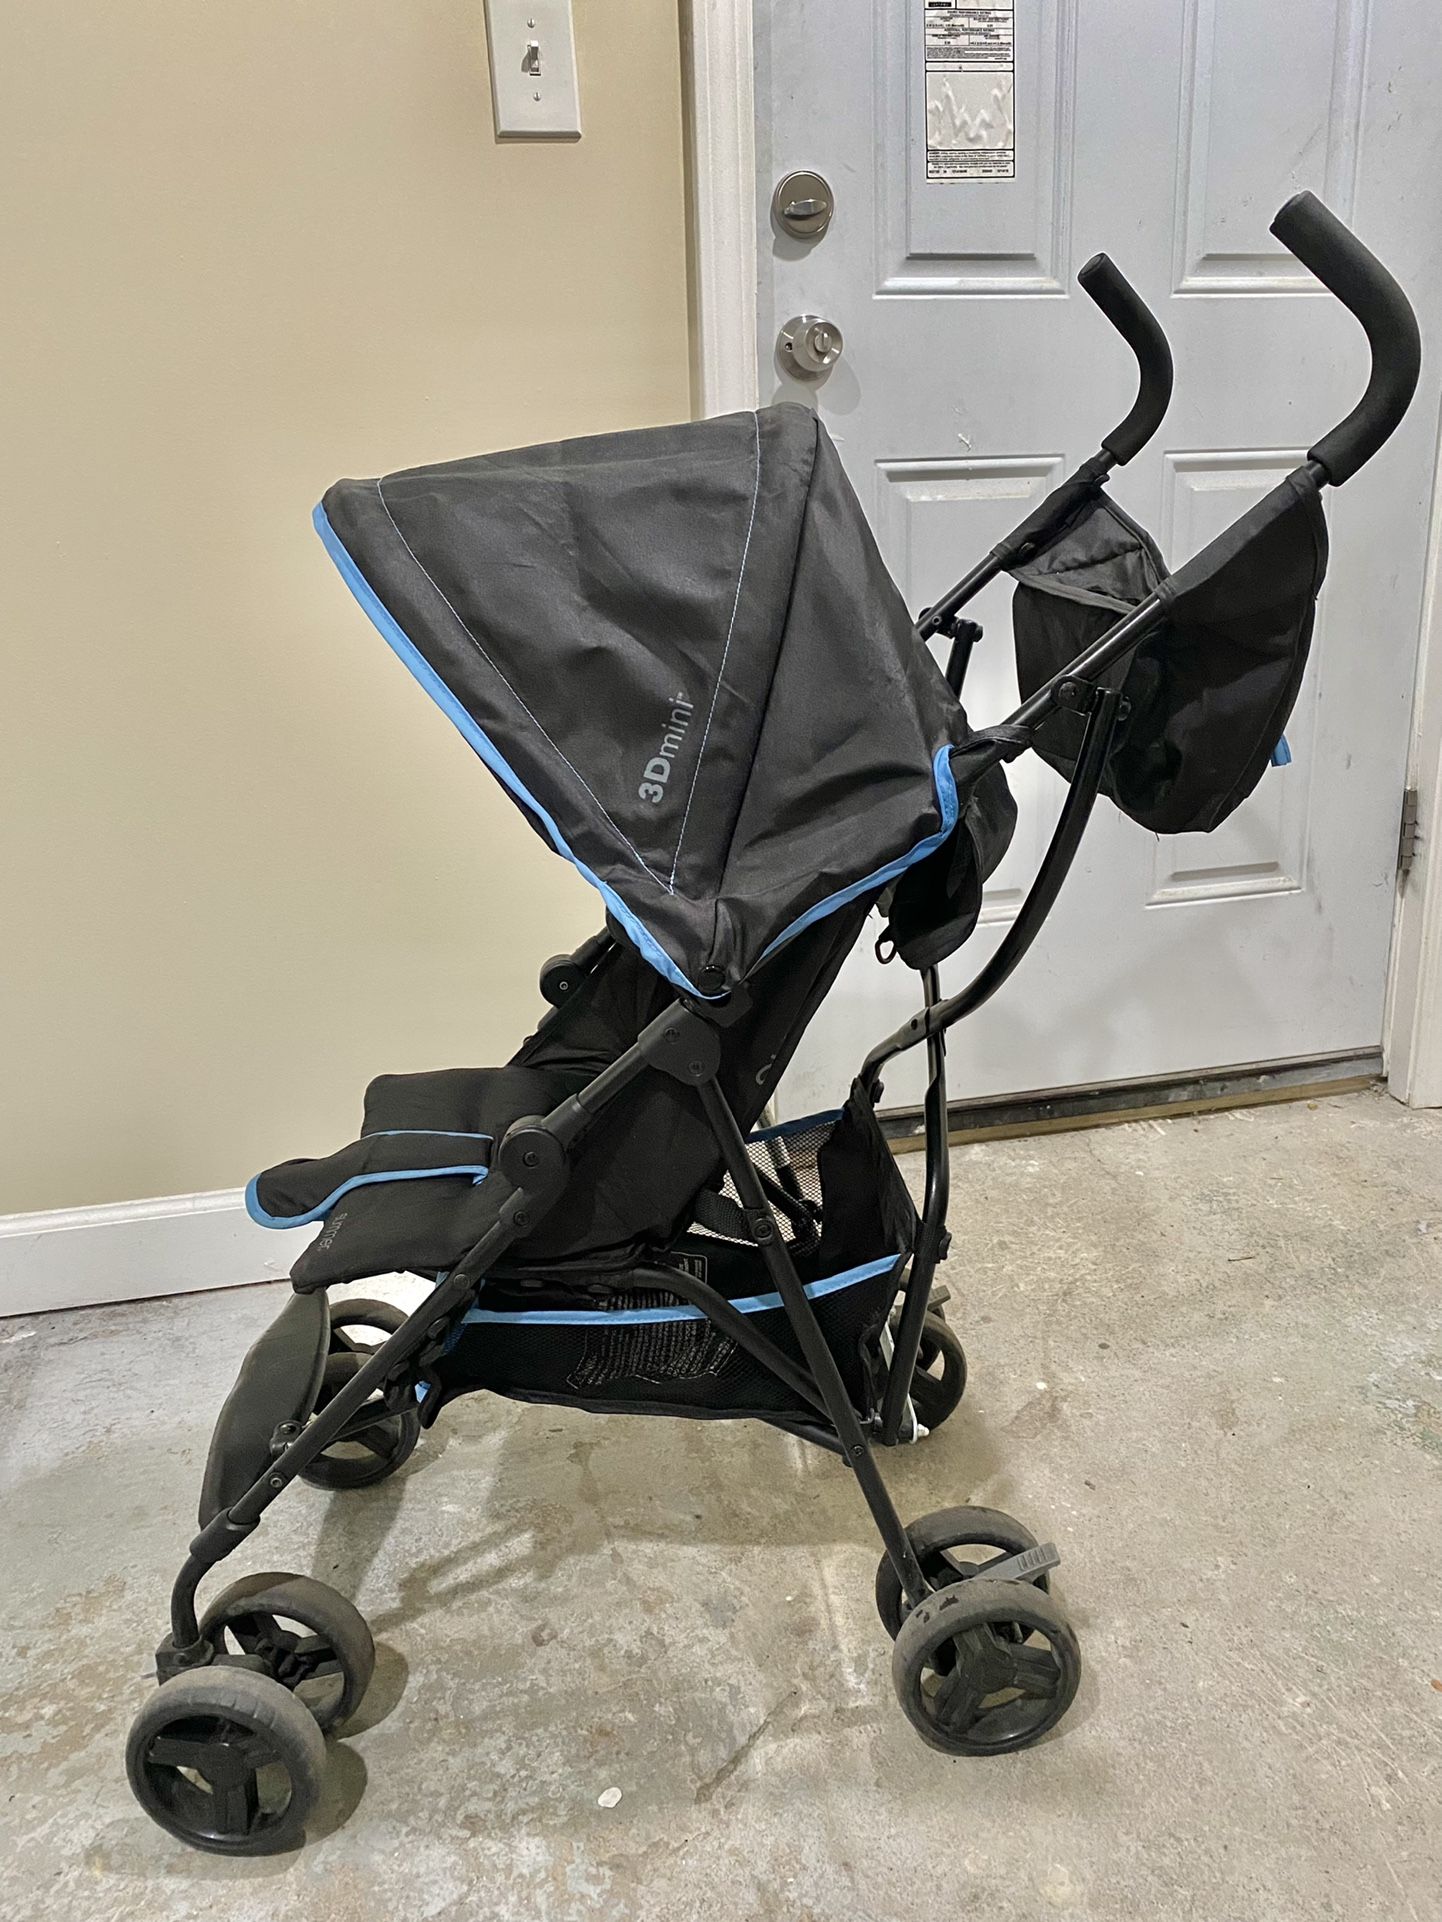 Summer Infant 3Dmini Convenience Stroller